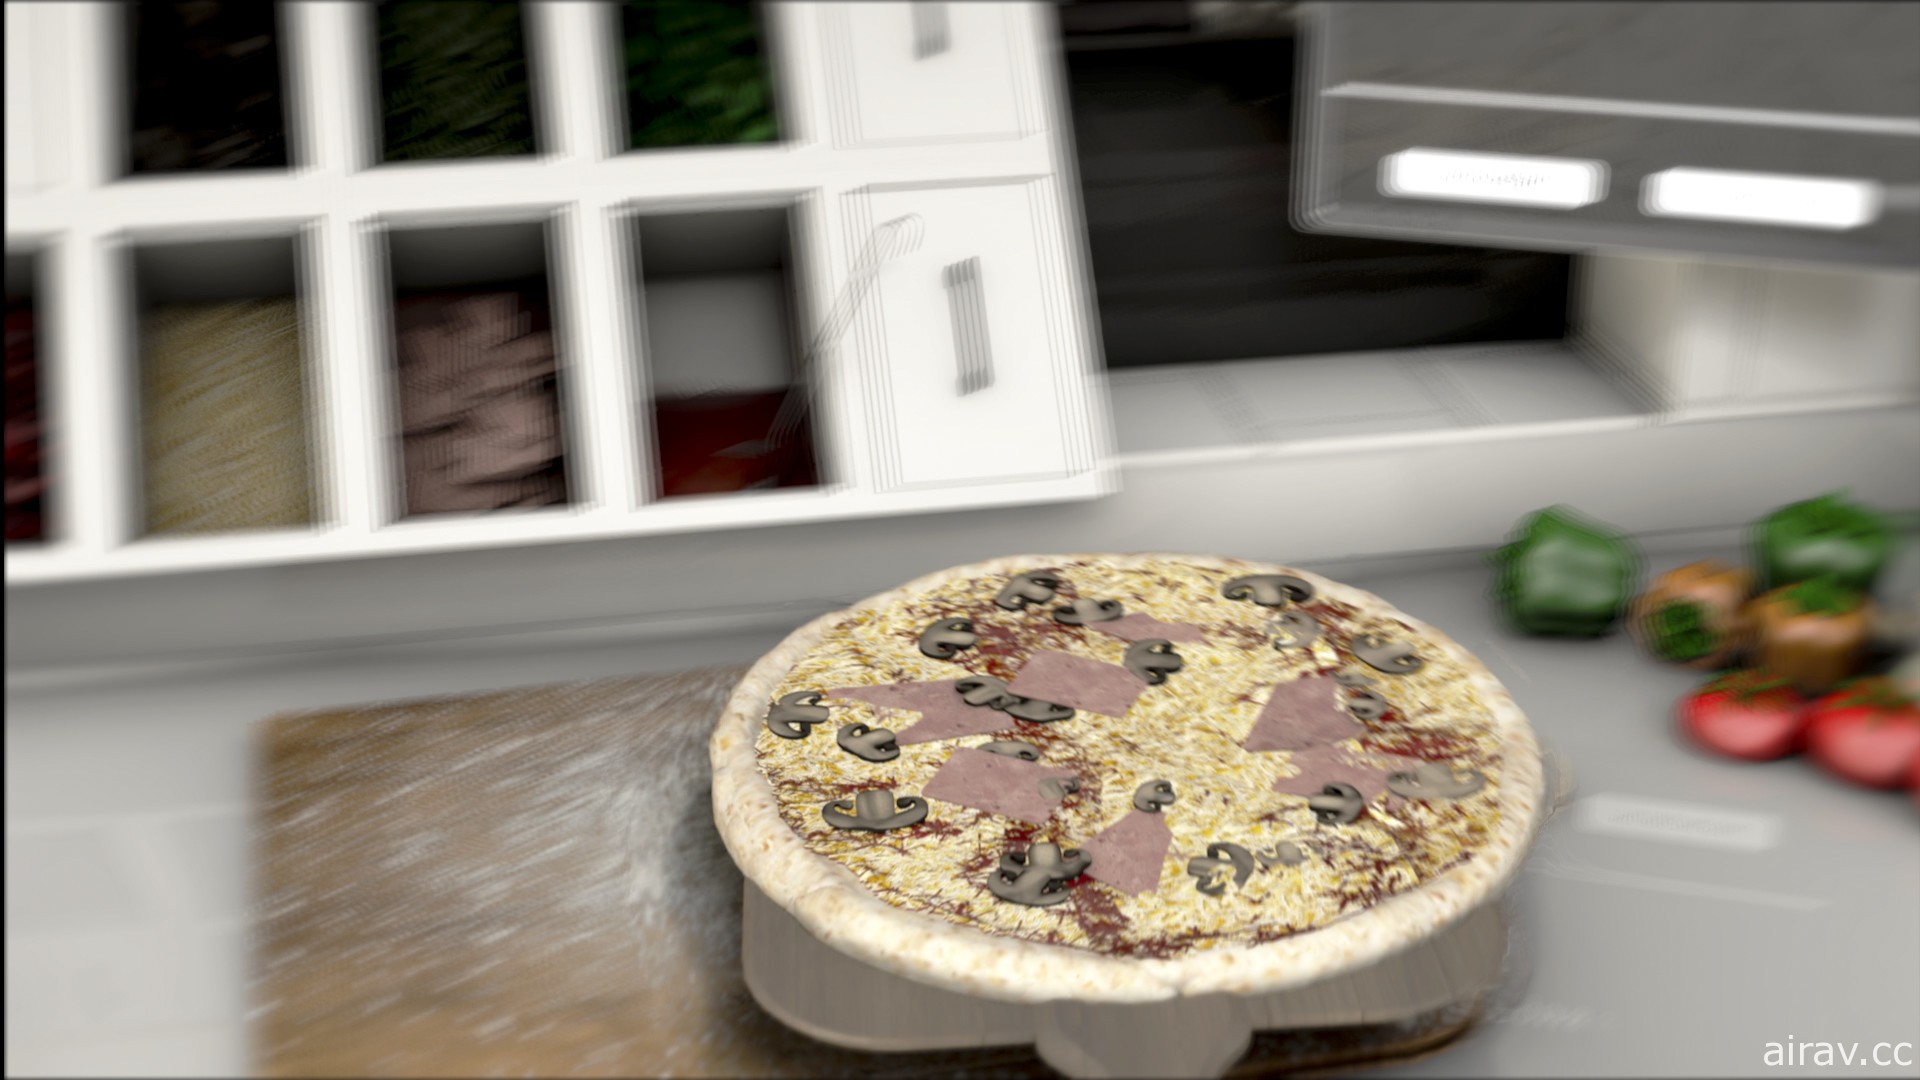 PC 新作《模擬披薩店 Pizza Simulator》預計 2021 年推出 扮演店經理製作披薩、外送